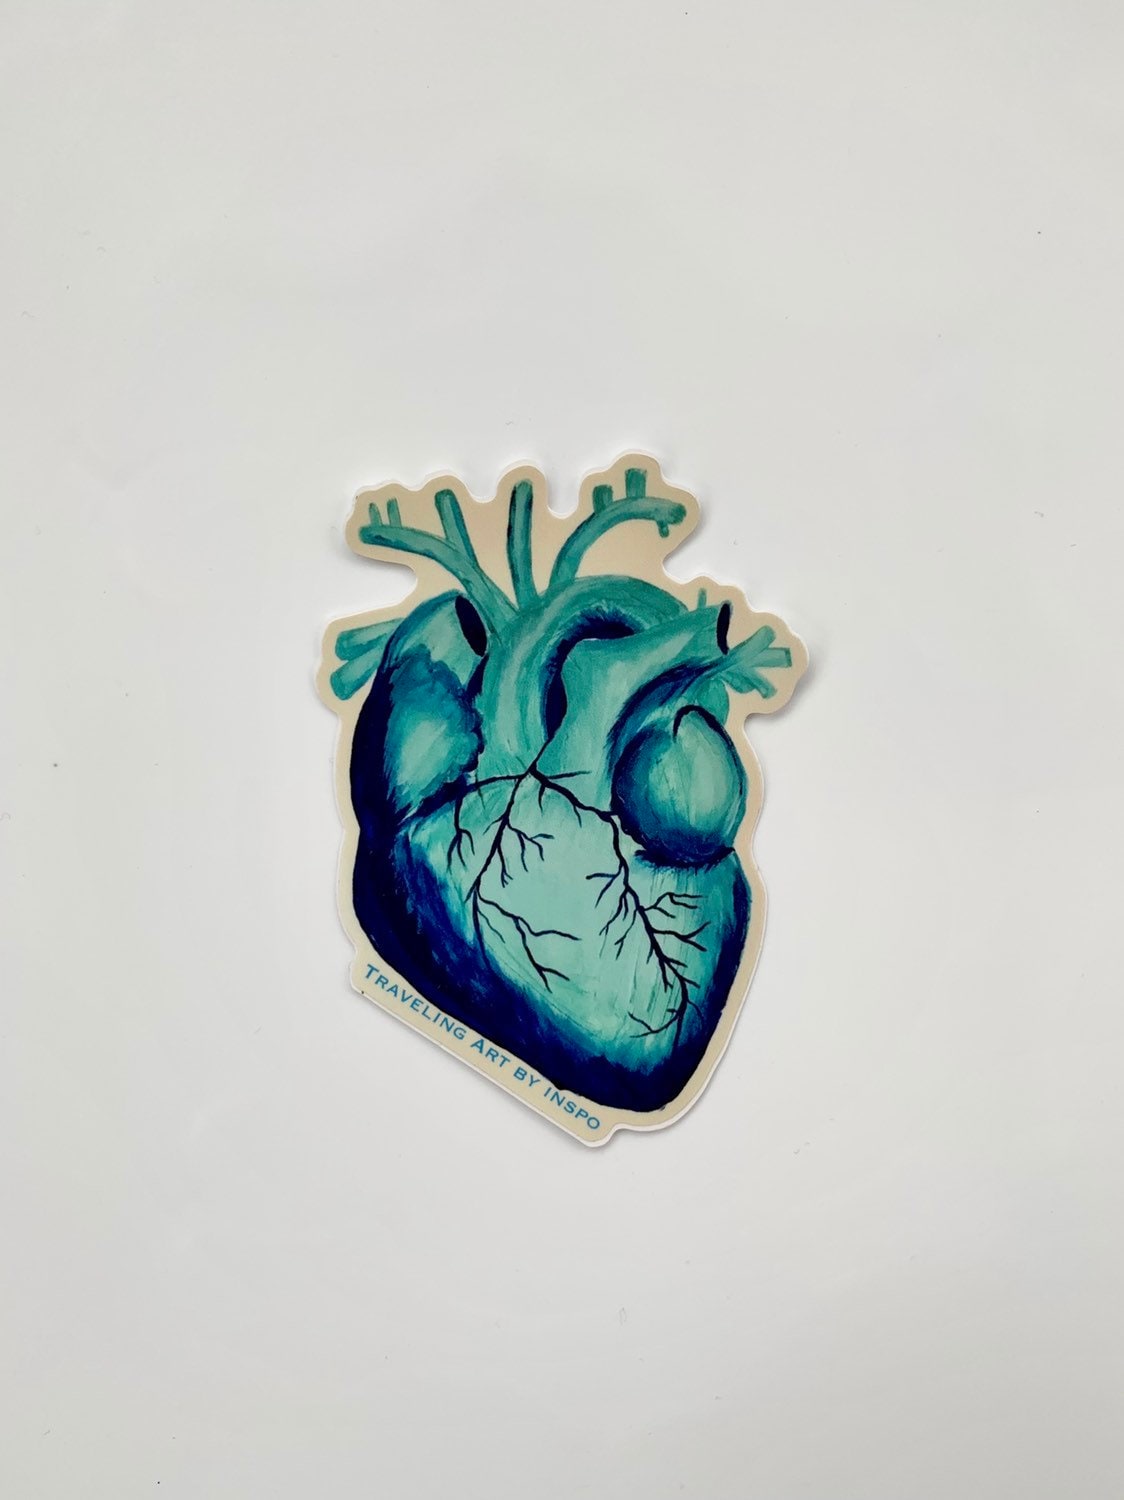 heart Sticker for Sale by Esteuan